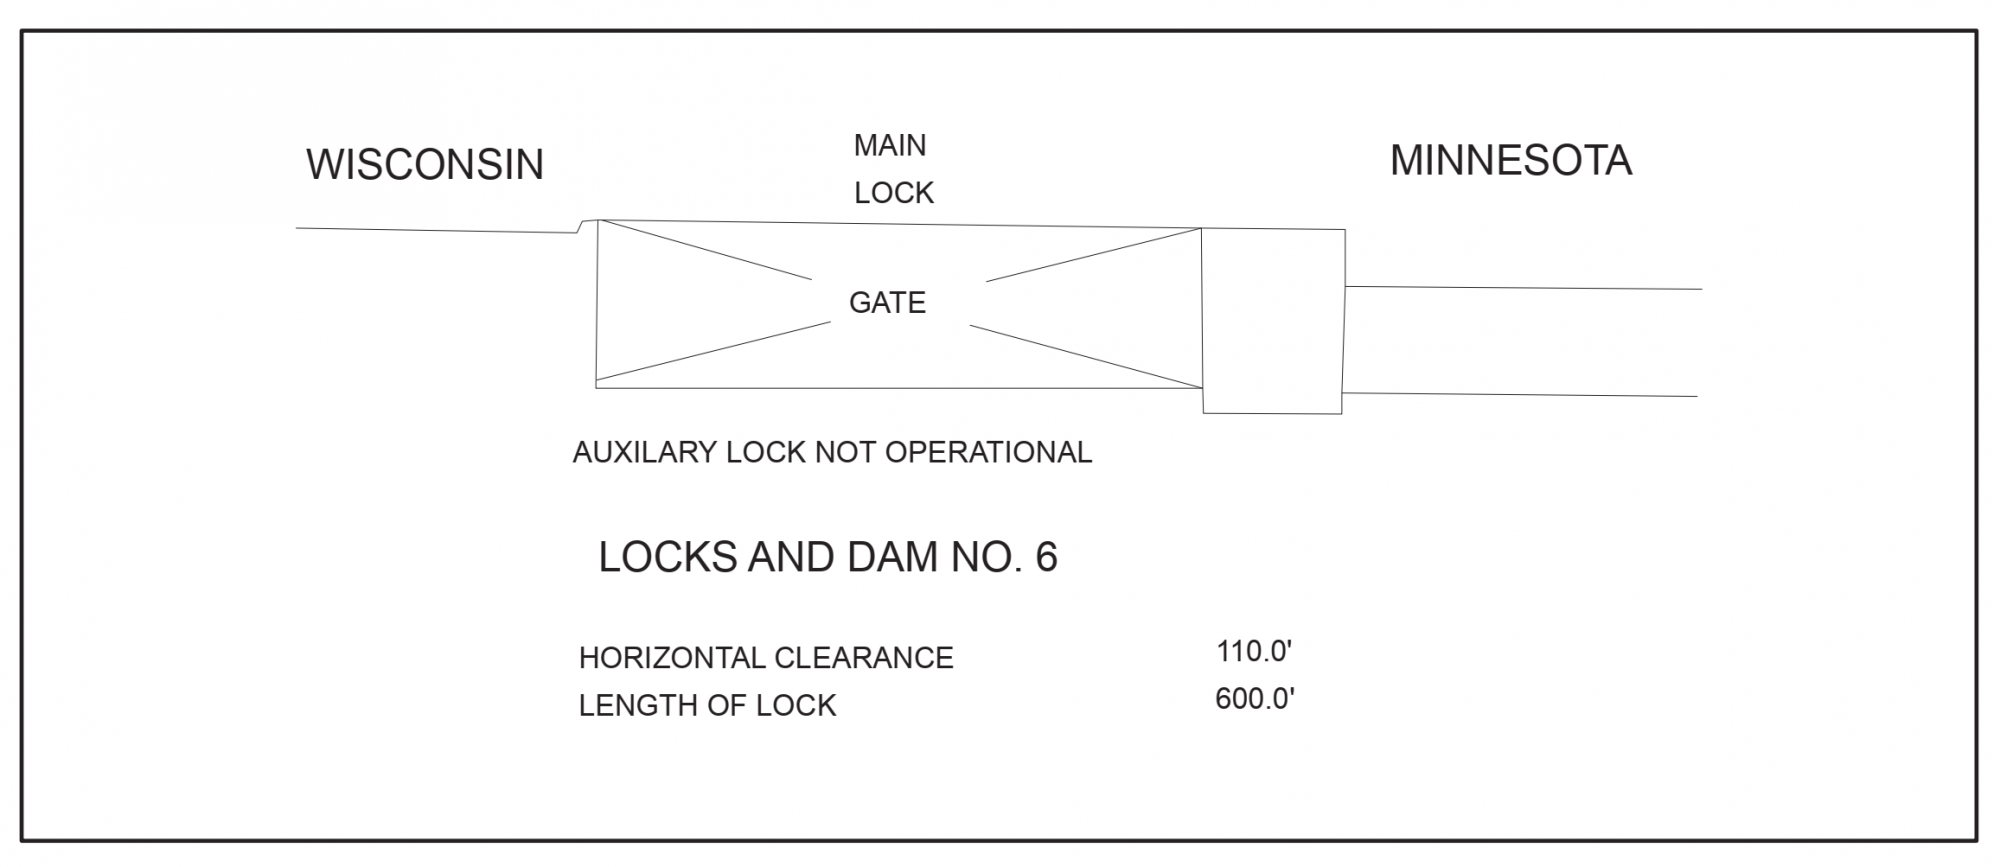 Trempealeau Lock And Dam No. 6 Clearances | Bridge Calculator LLC